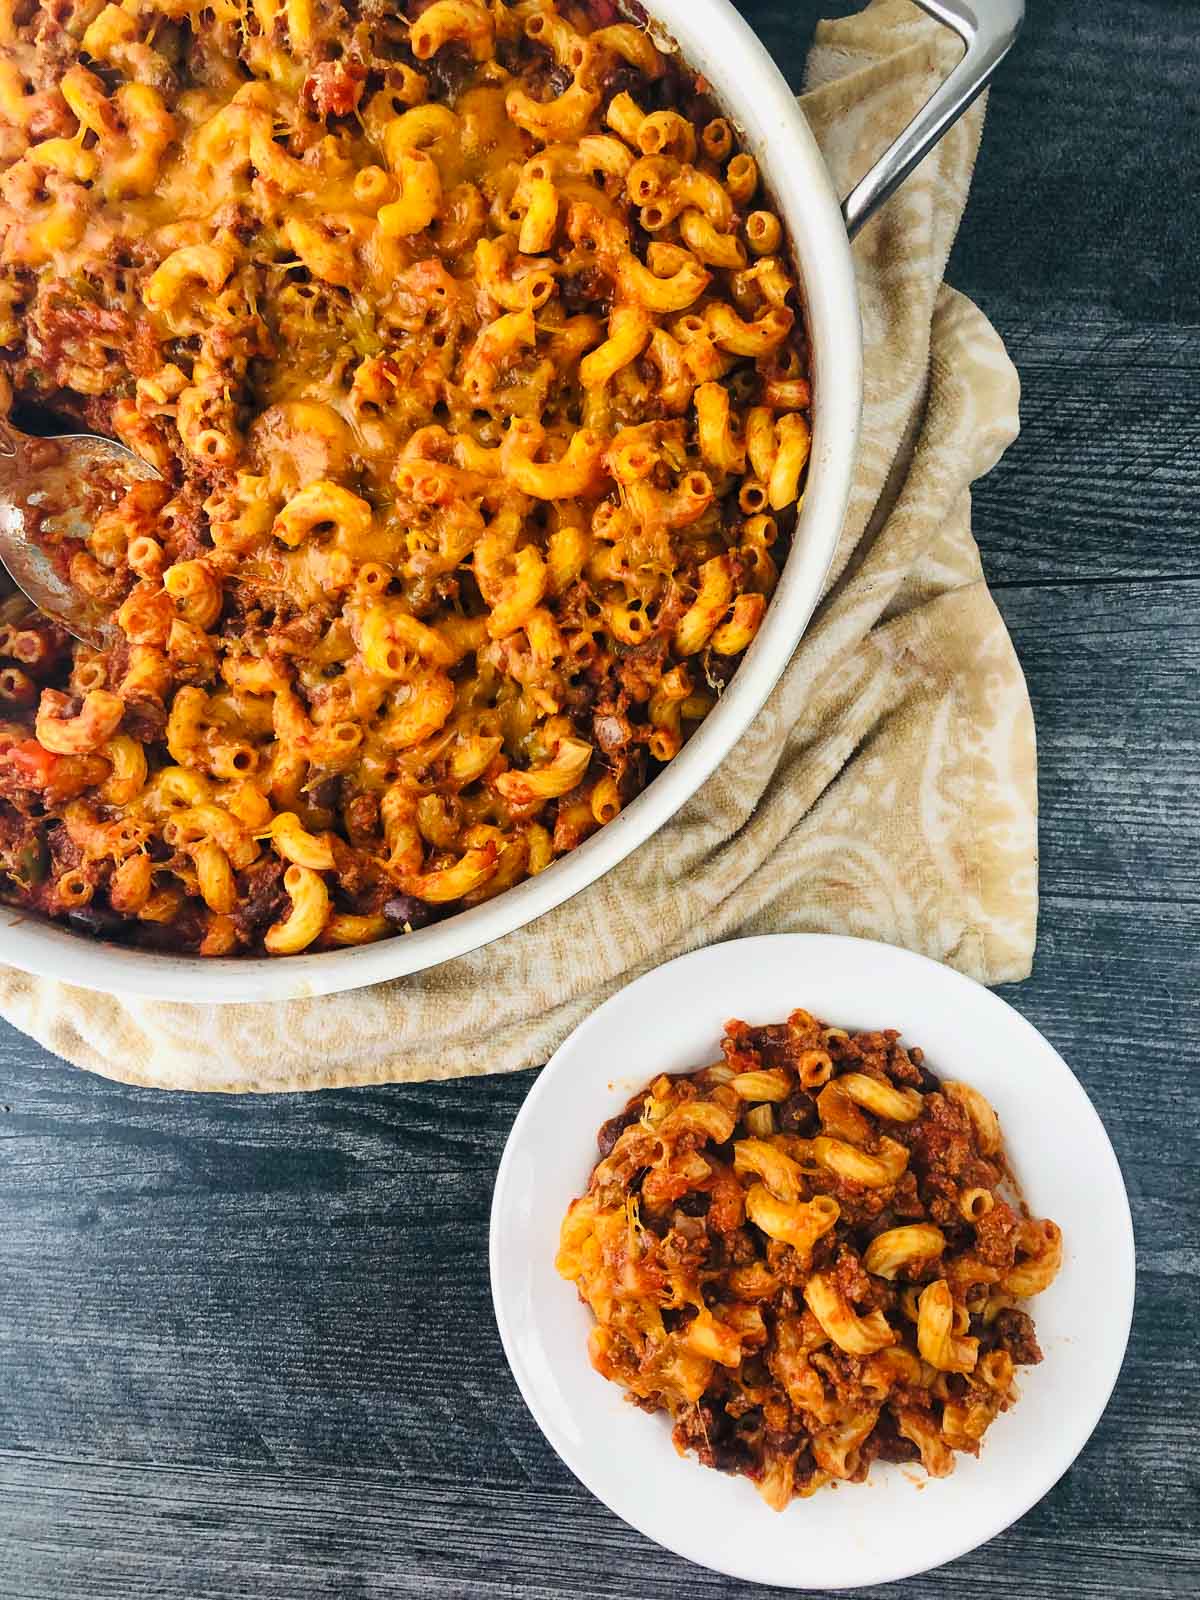 pan and plate with cheesy chili macaroni